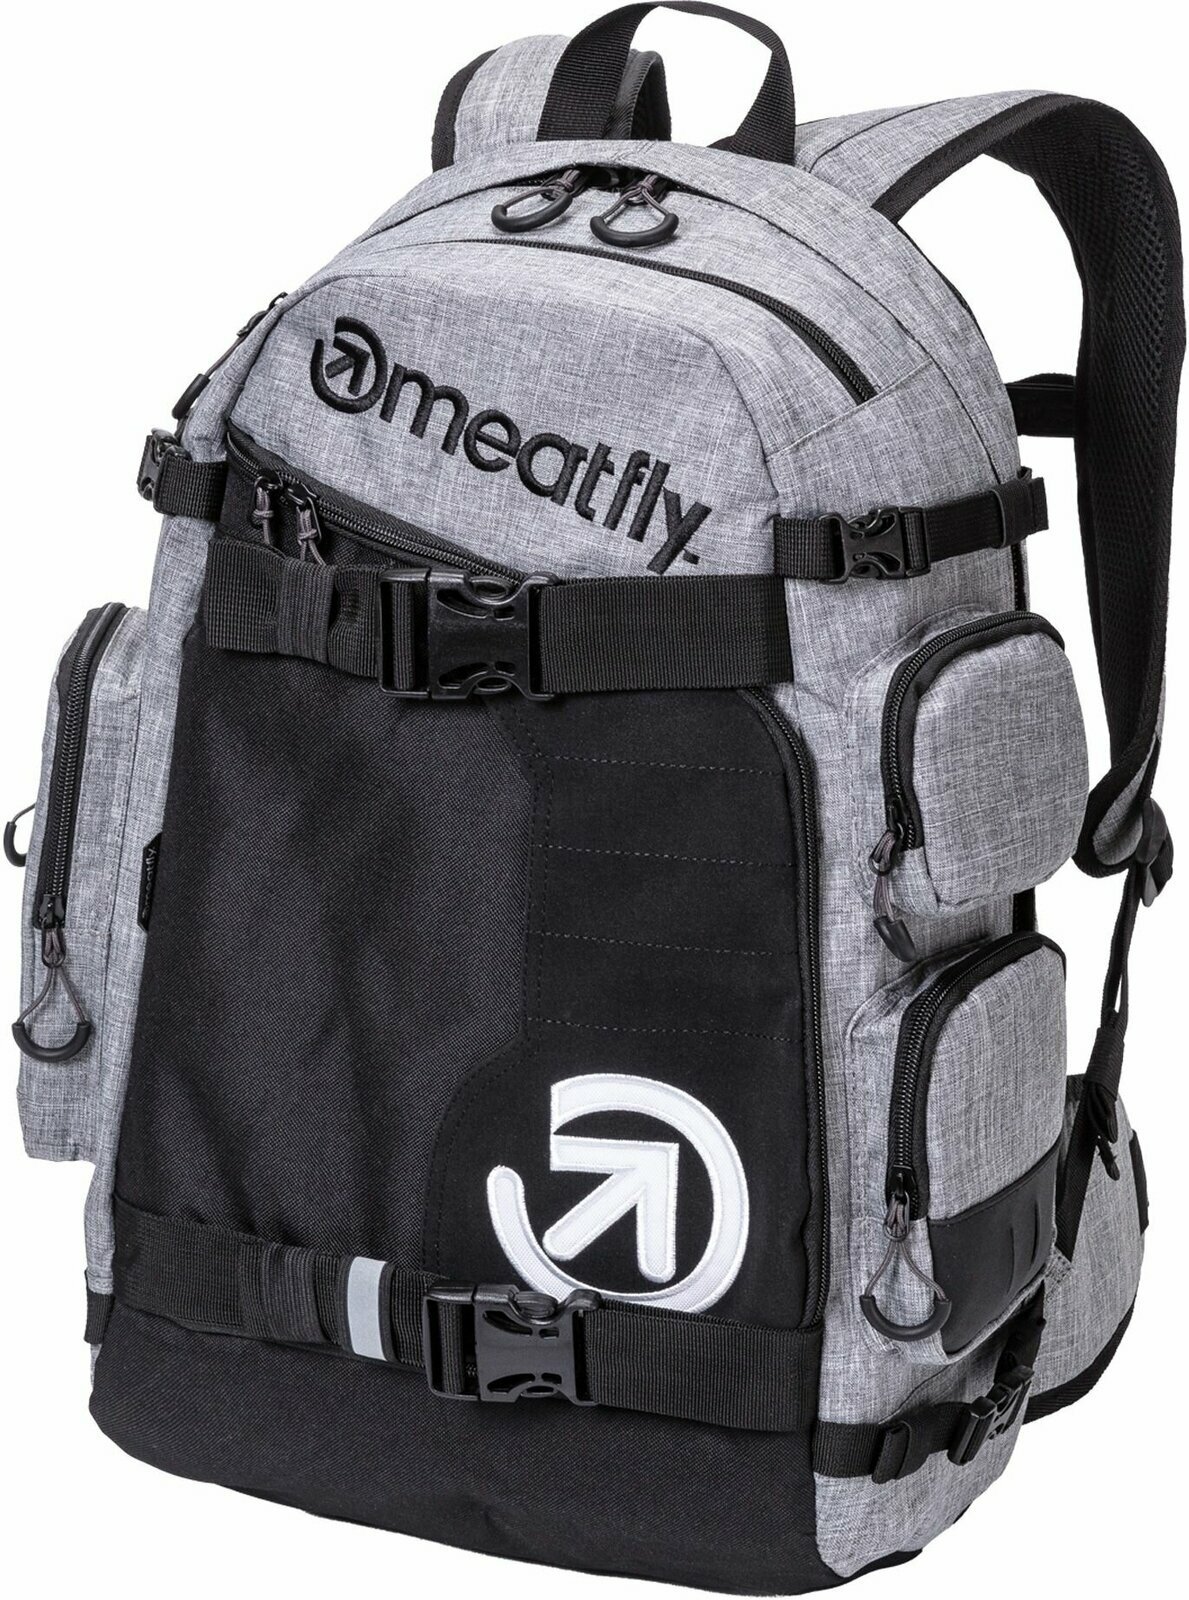 Lifestyle ruksak / Taška Meatfly Wanderer Backpack Heather Grey 28 L Batoh Lifestyle ruksak / Taška